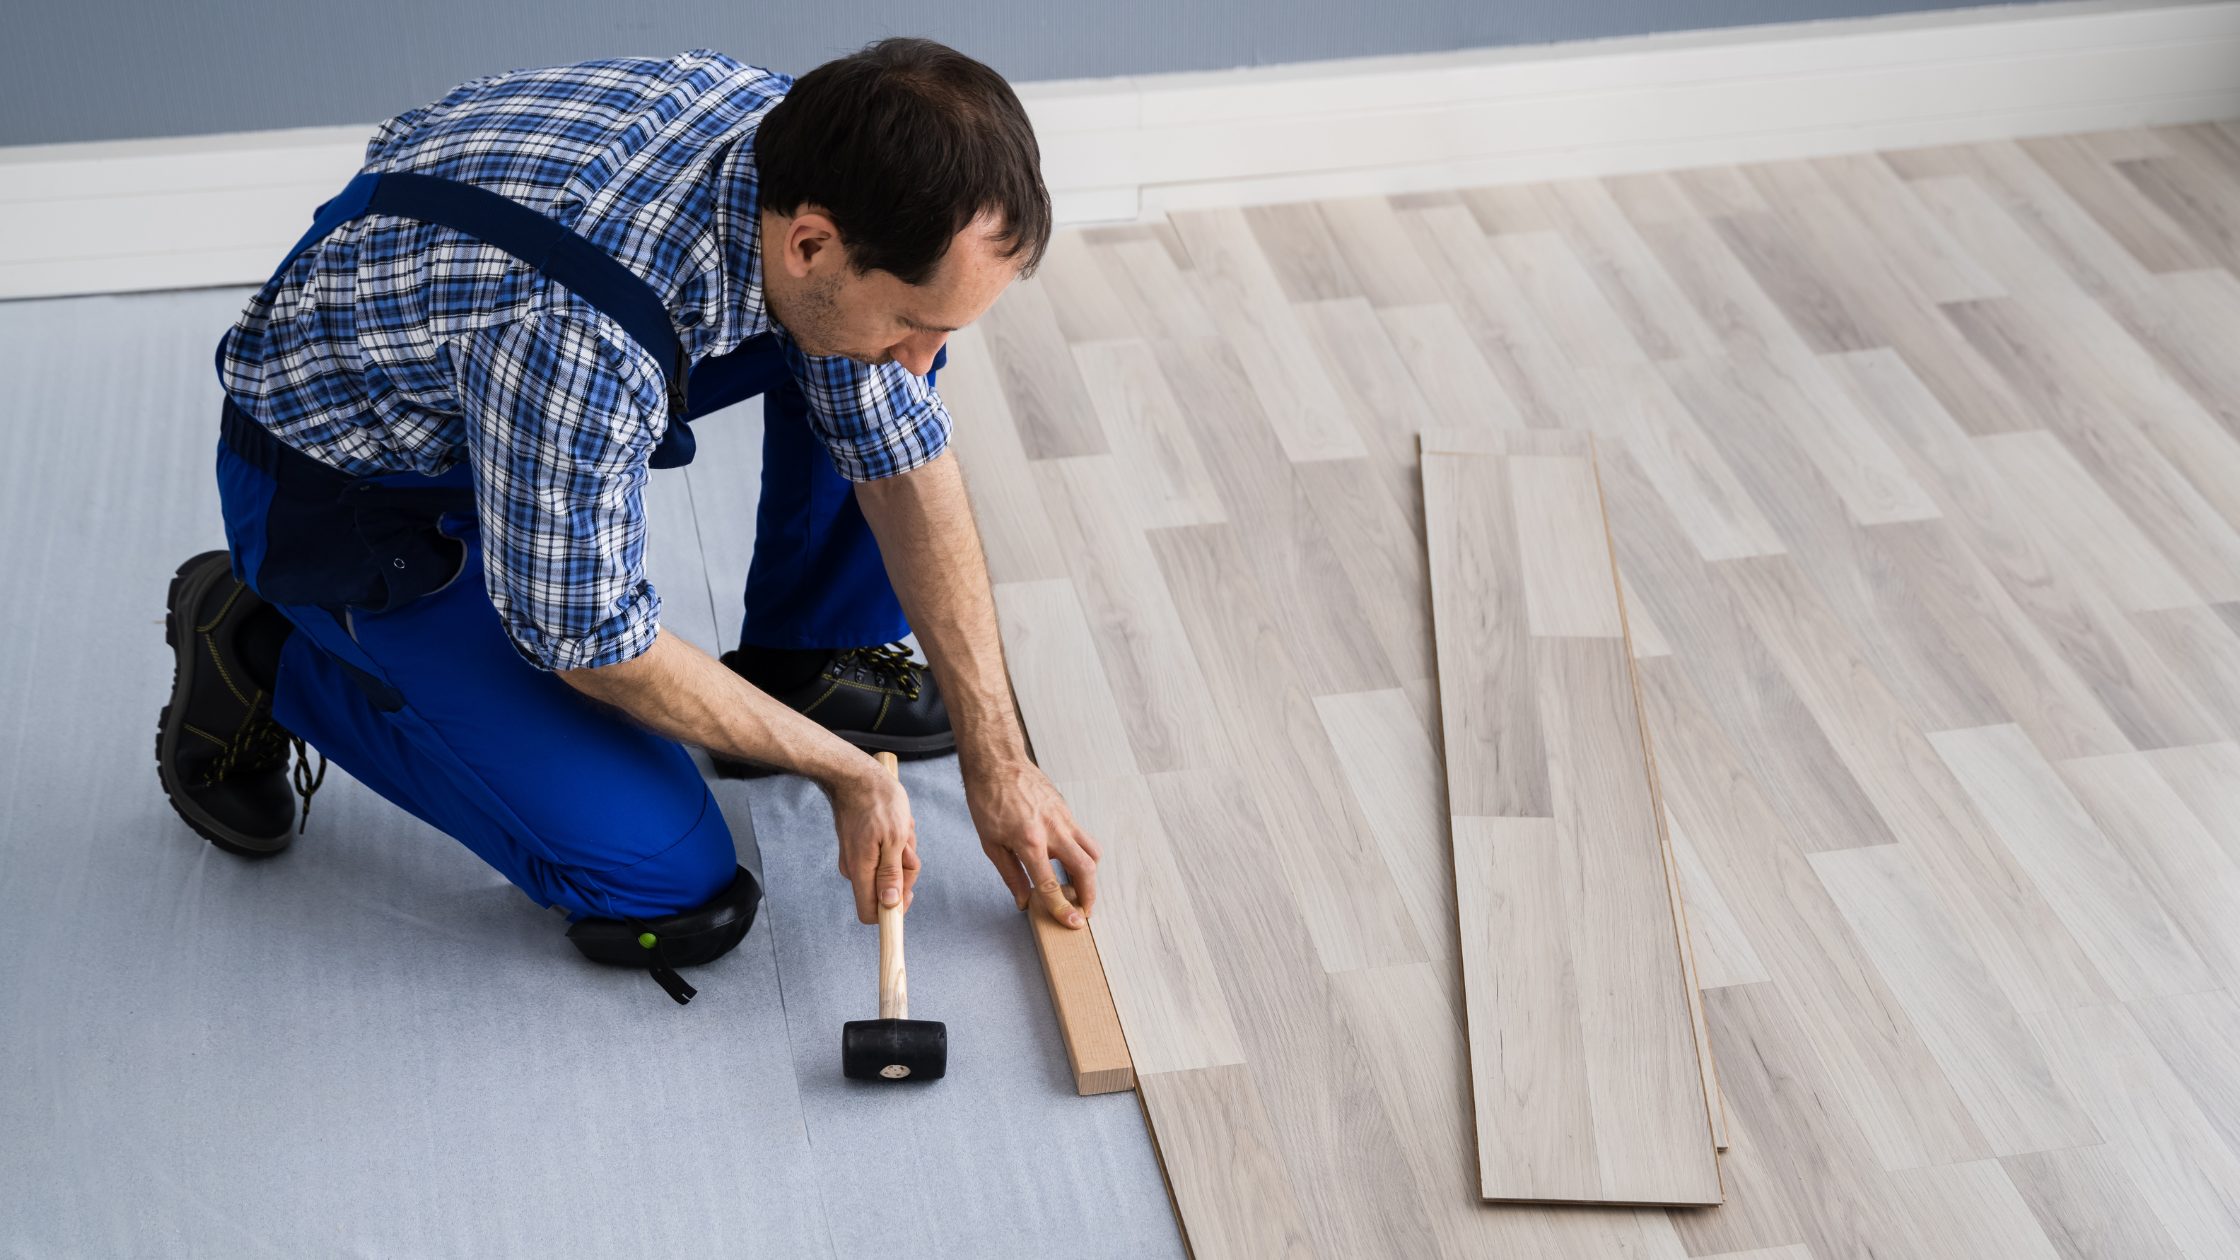 Man installing wood flooring